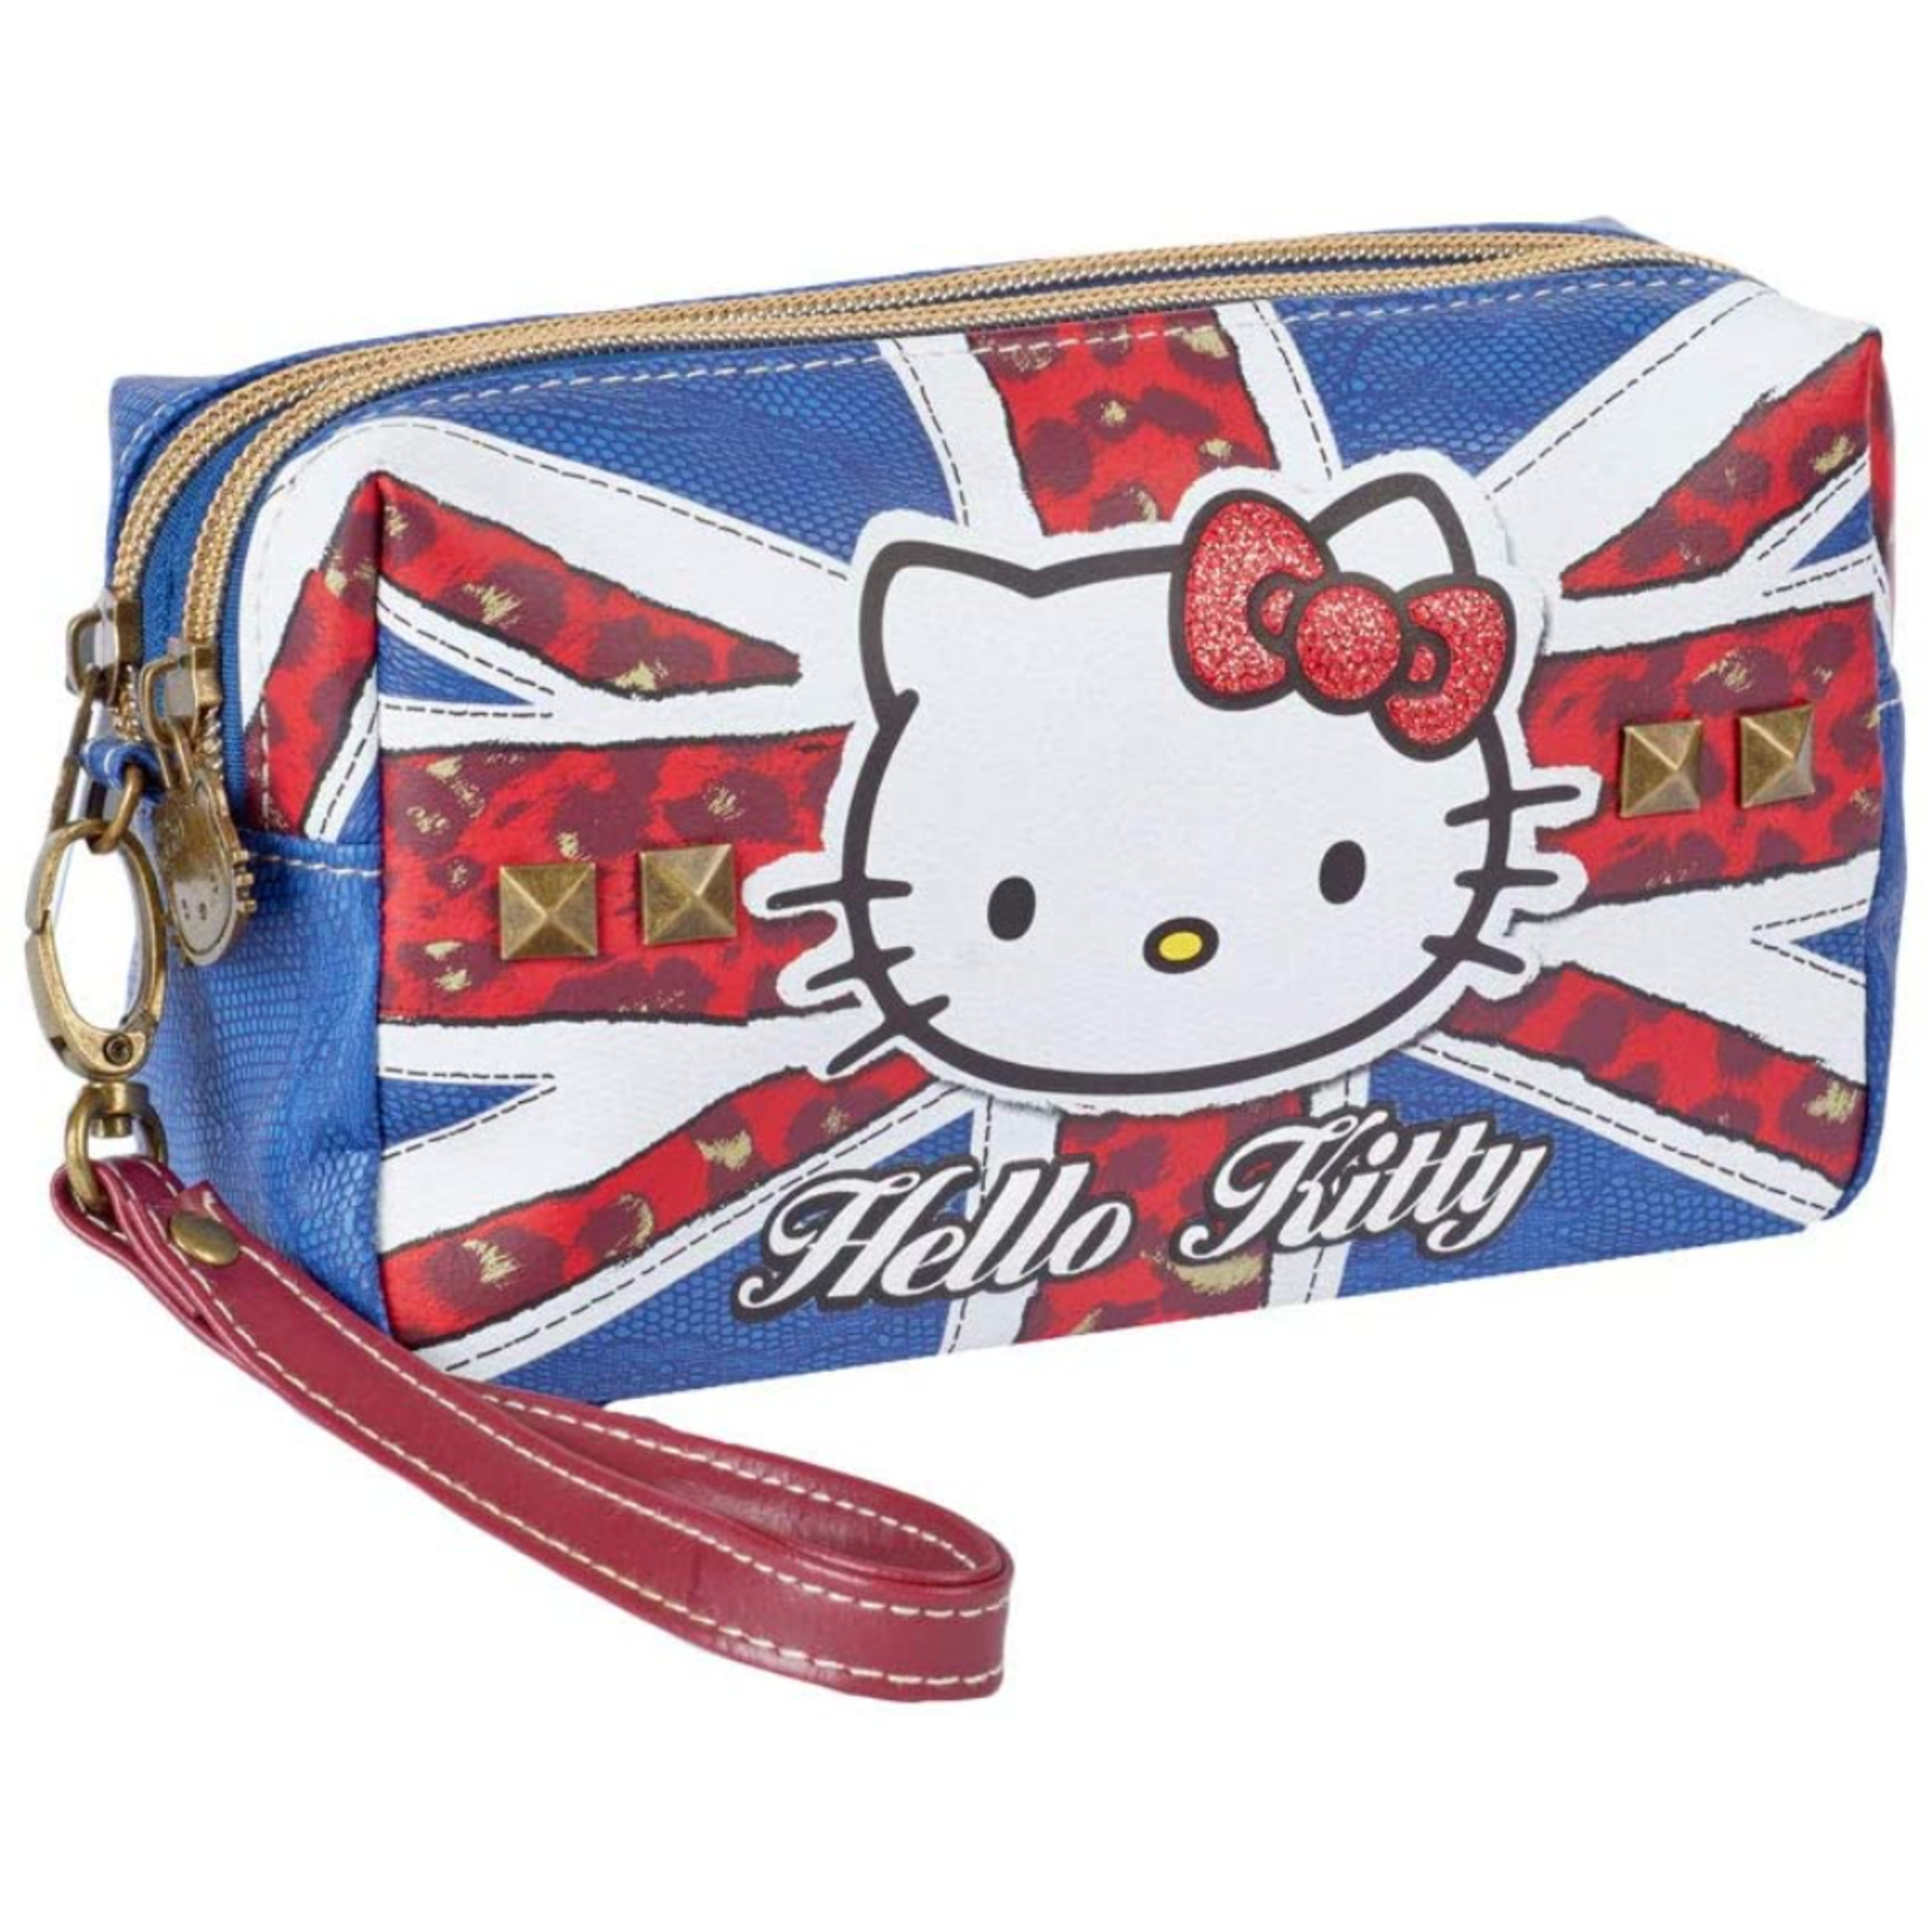 Neceser Hello Kitty 66715 - azul - 